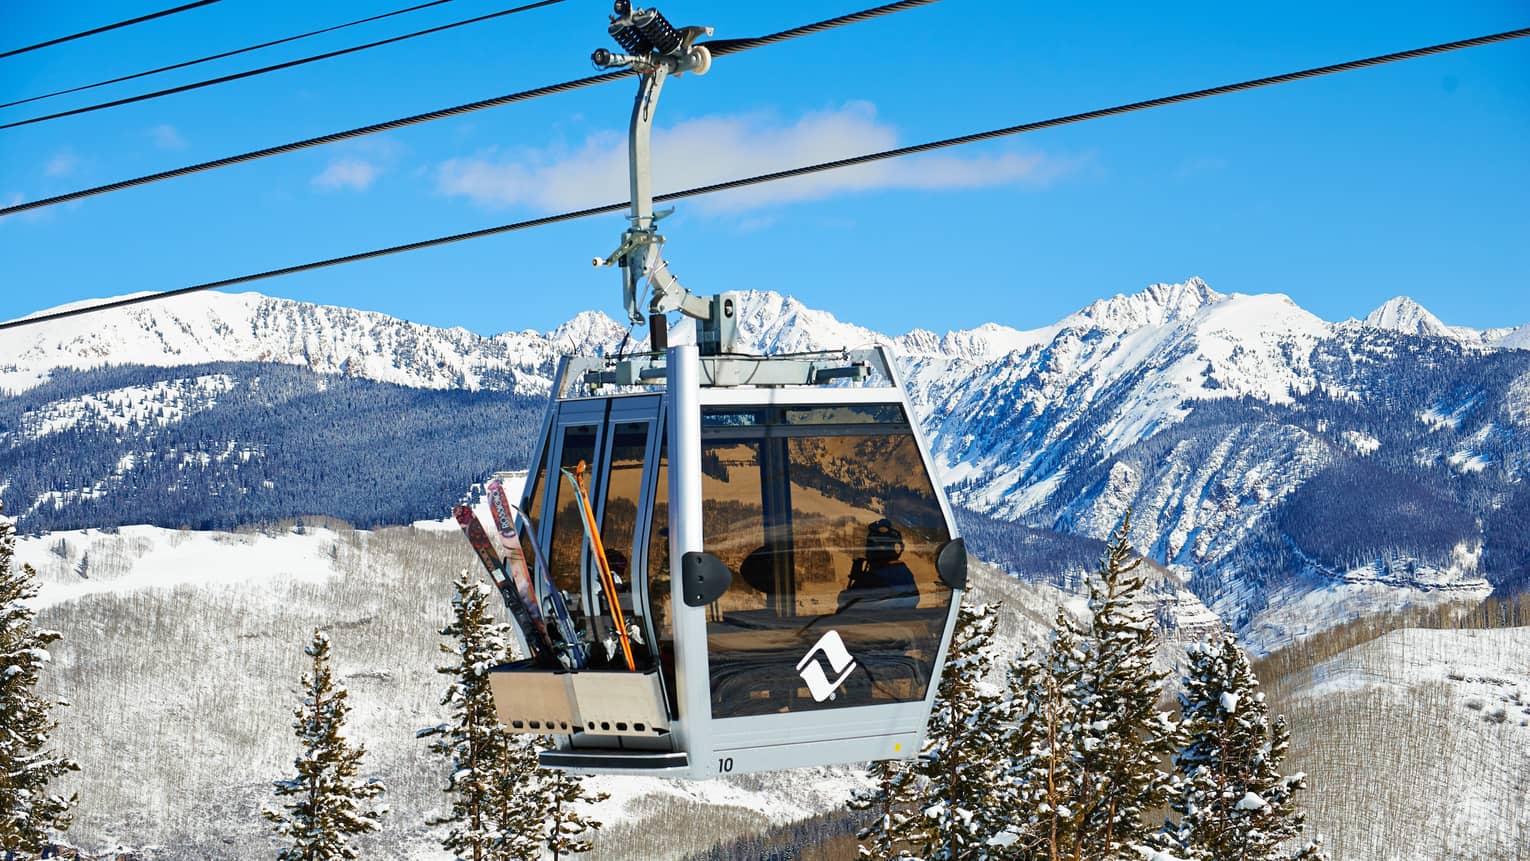 Ski lift heads uphill on snowy Vail, Colorado mountain